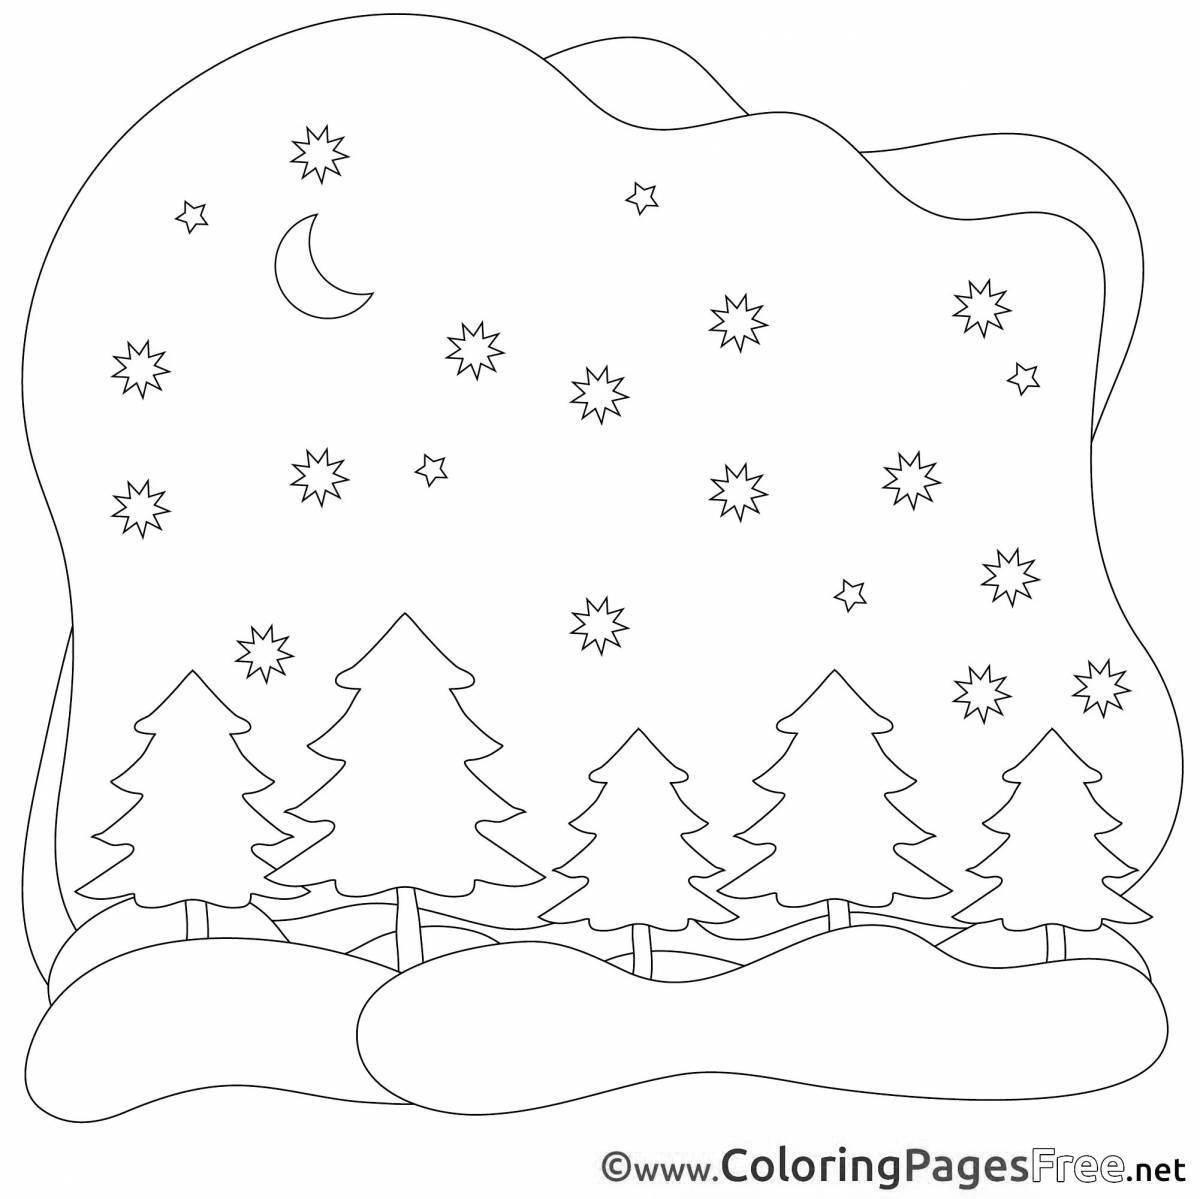 Attractive blizzard coloring page